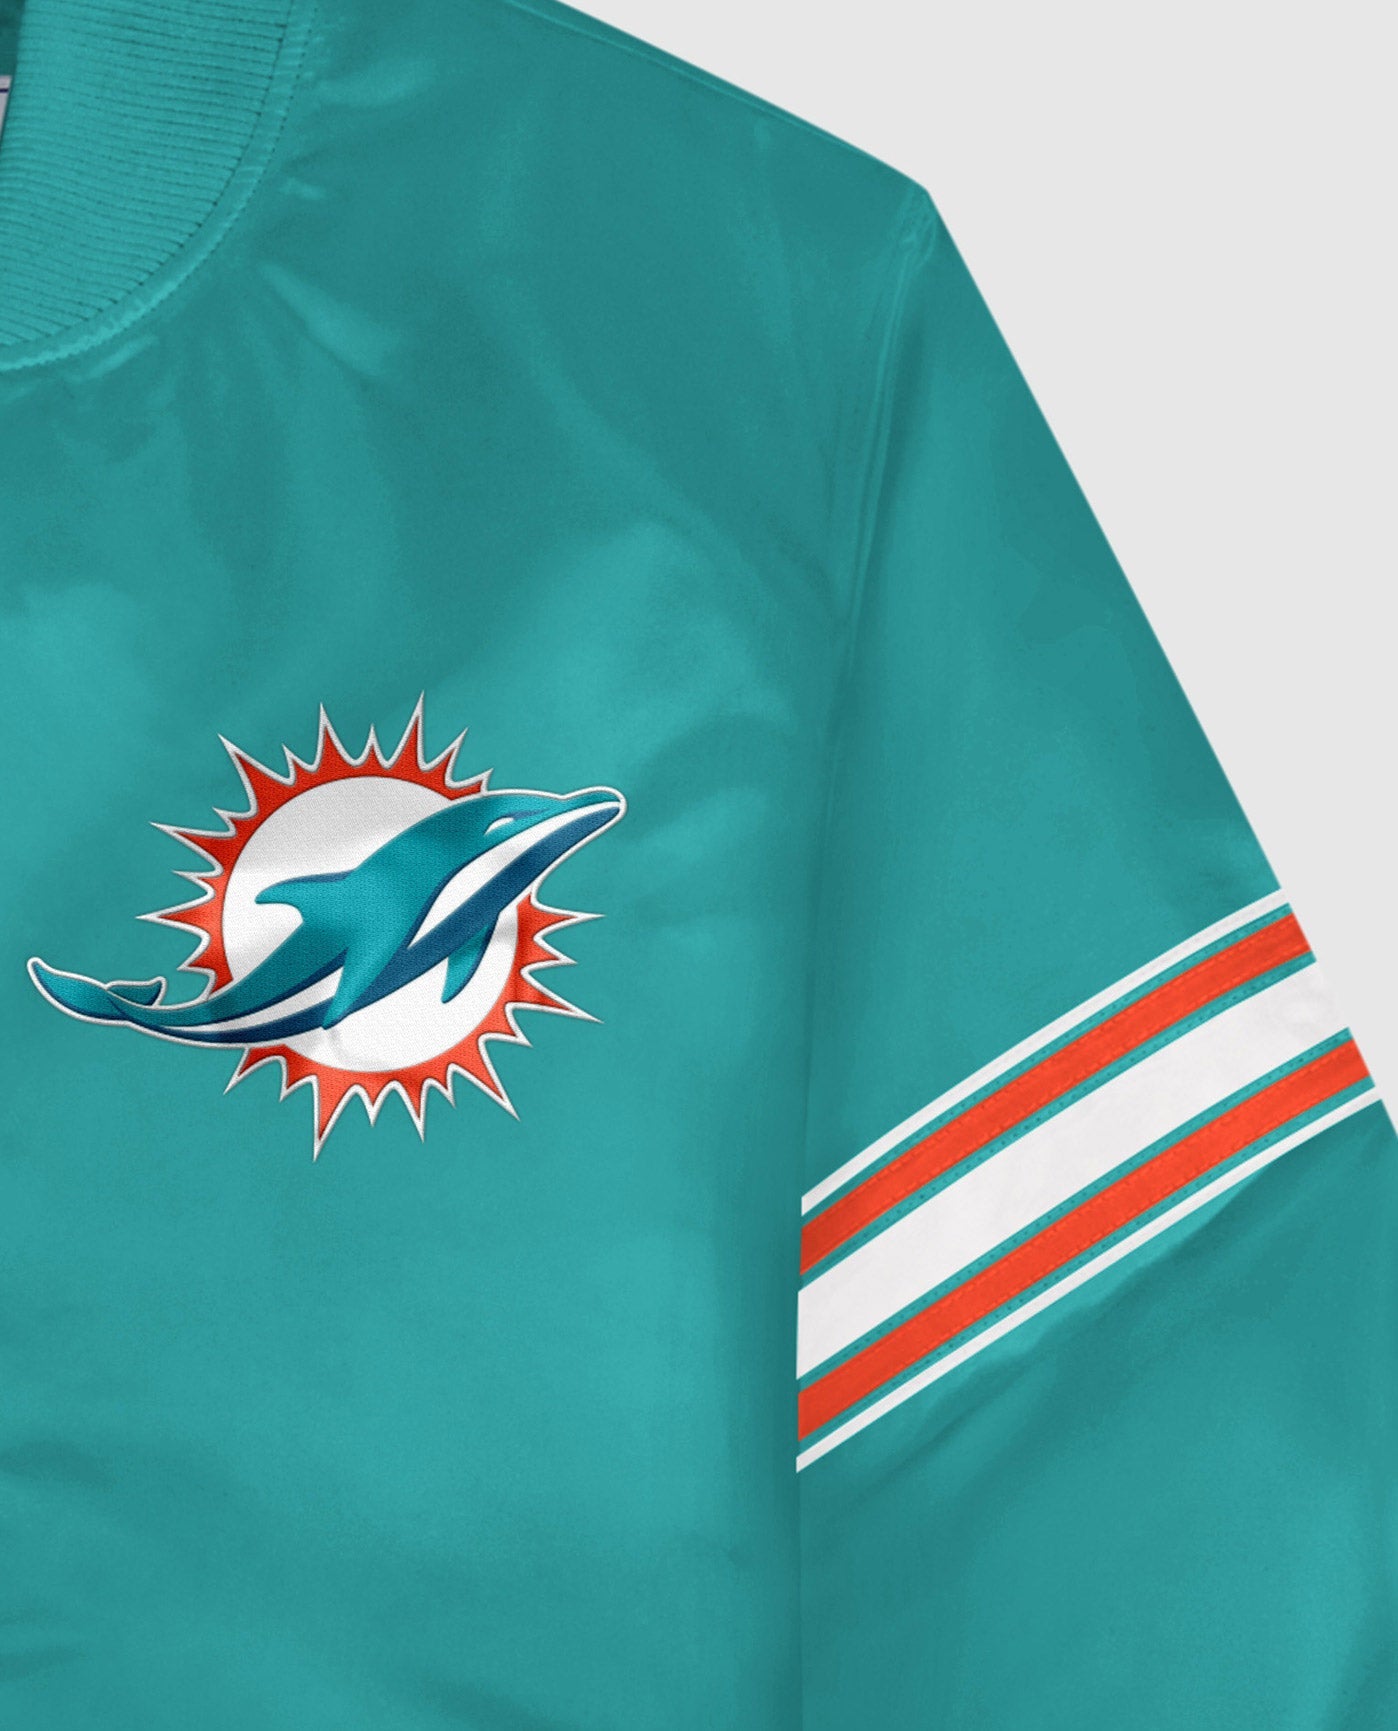 Miami Dolphins Twill Applique Logo And Color Stripe Sleeve | Dolphins Aqua